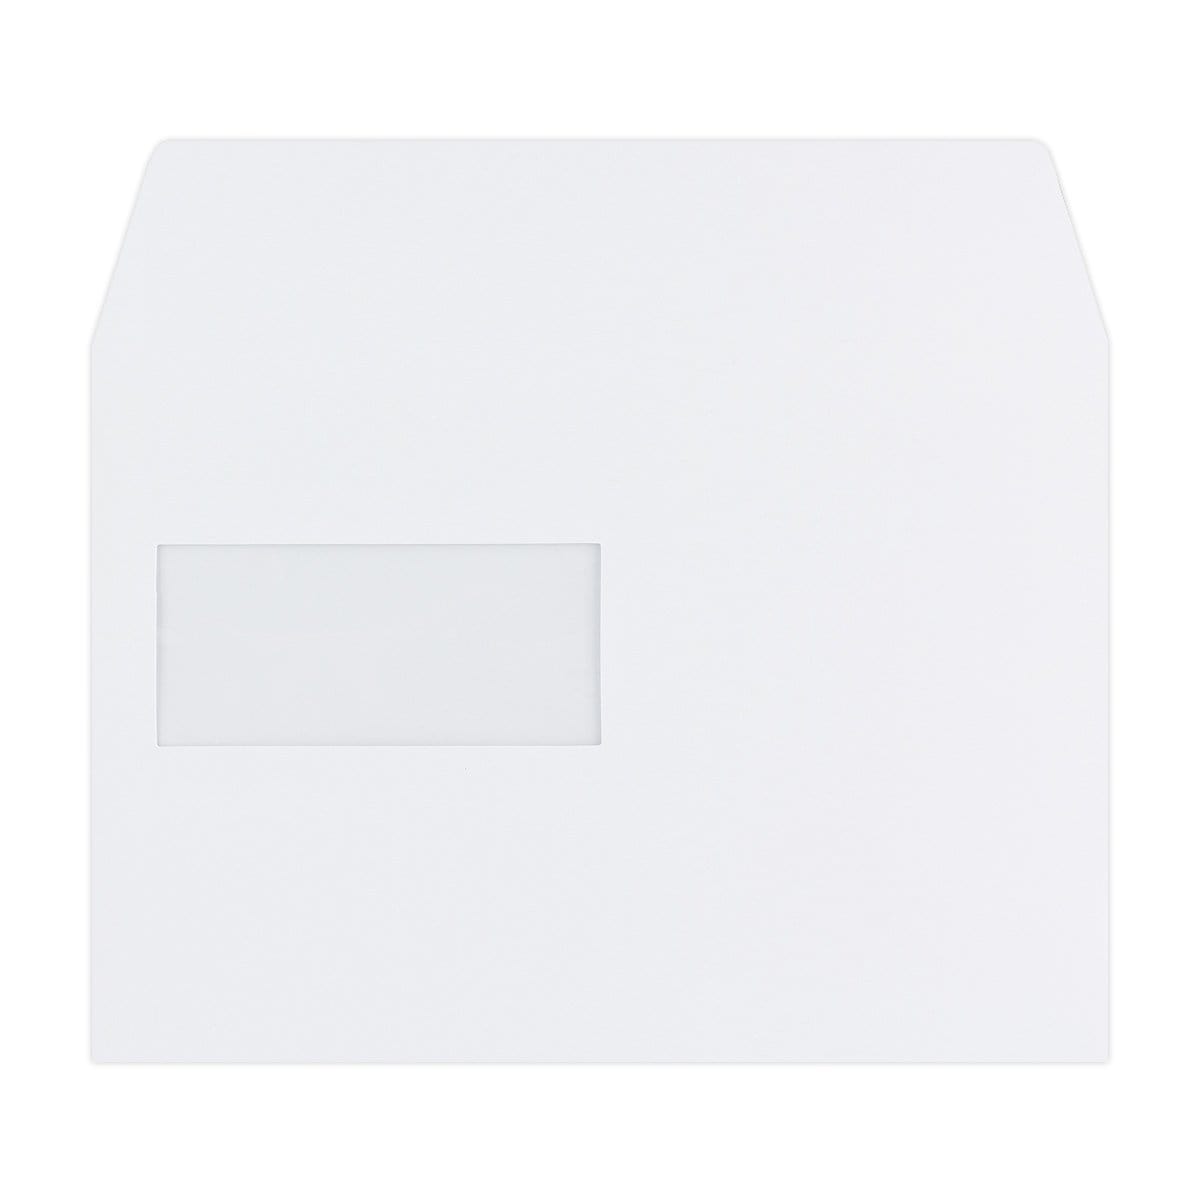 C5 White Luxury Wallet Window 180gsm Peel & Seal Envelopes [Qty 250] 162 x 229mm - All Colour Envelopes